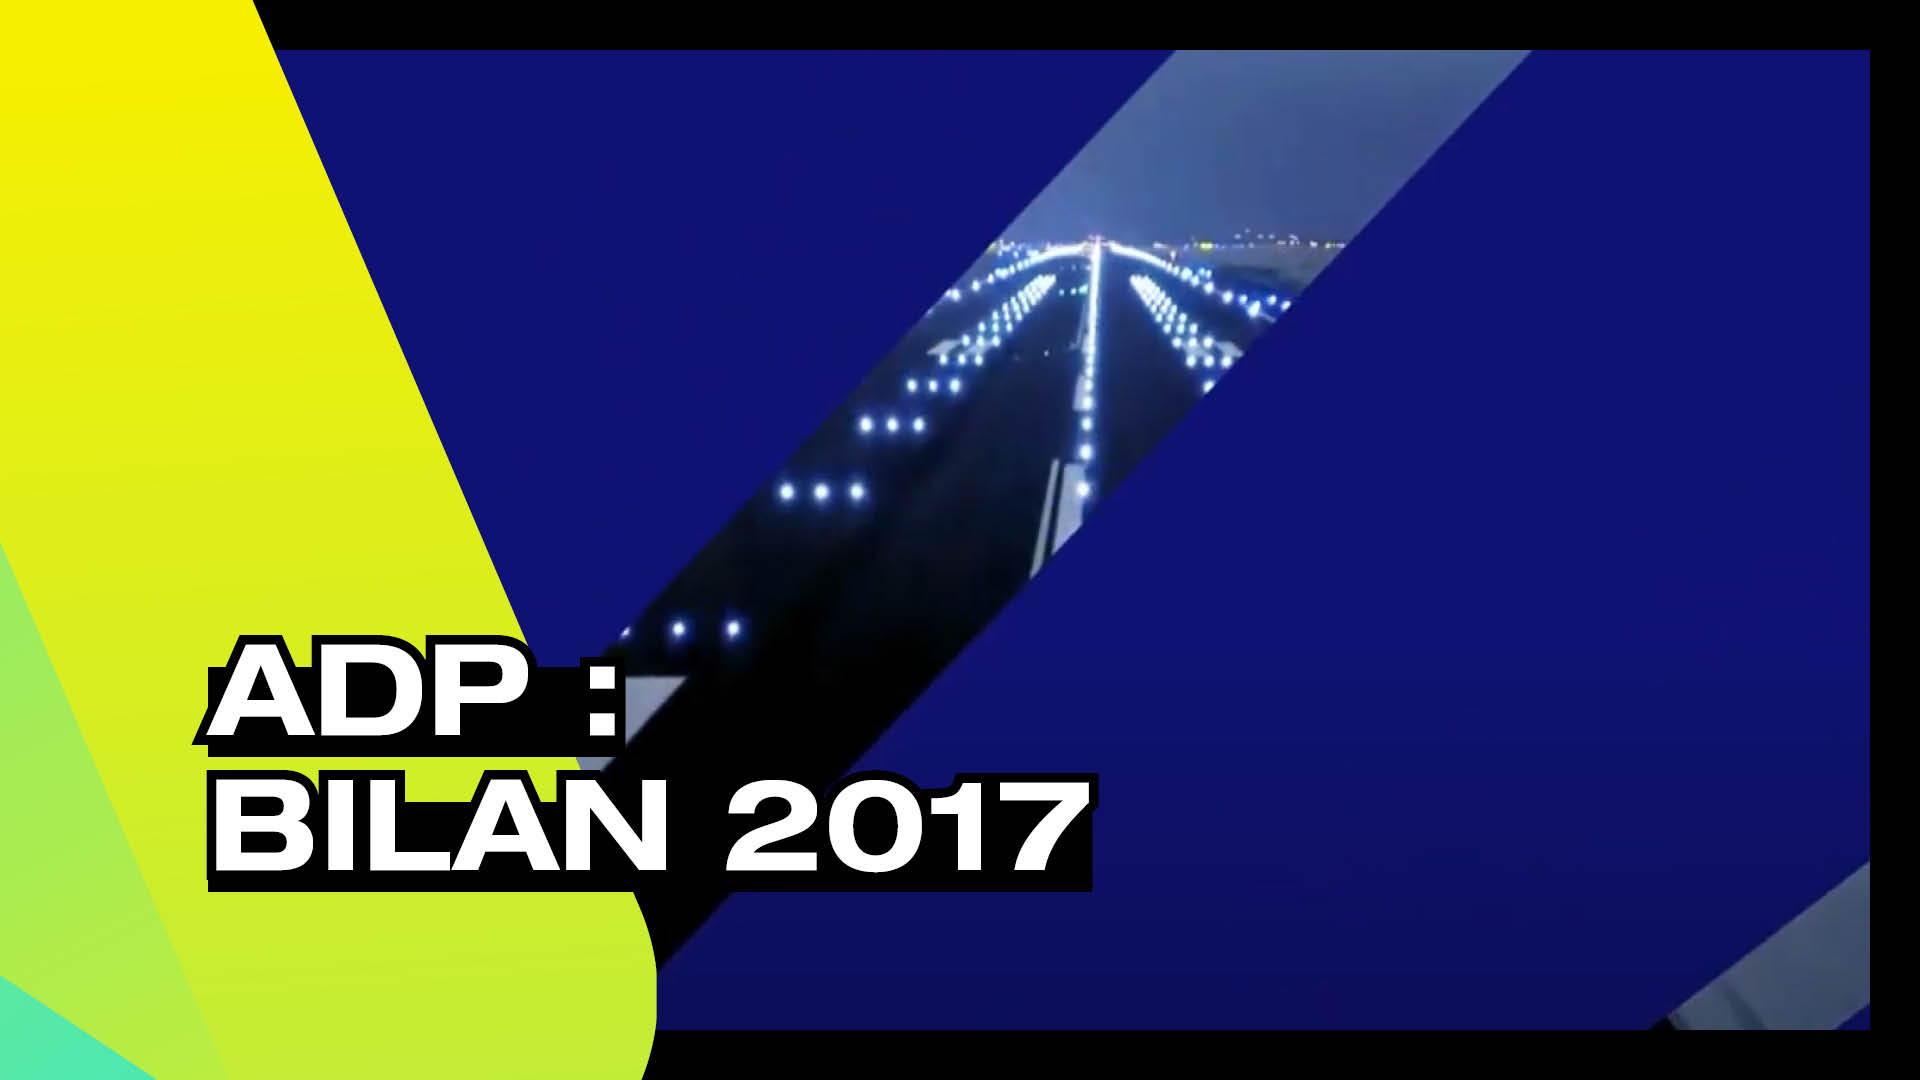 ADP - Vidéo Bilan 2017ADP – Vidéo Bilan 2017